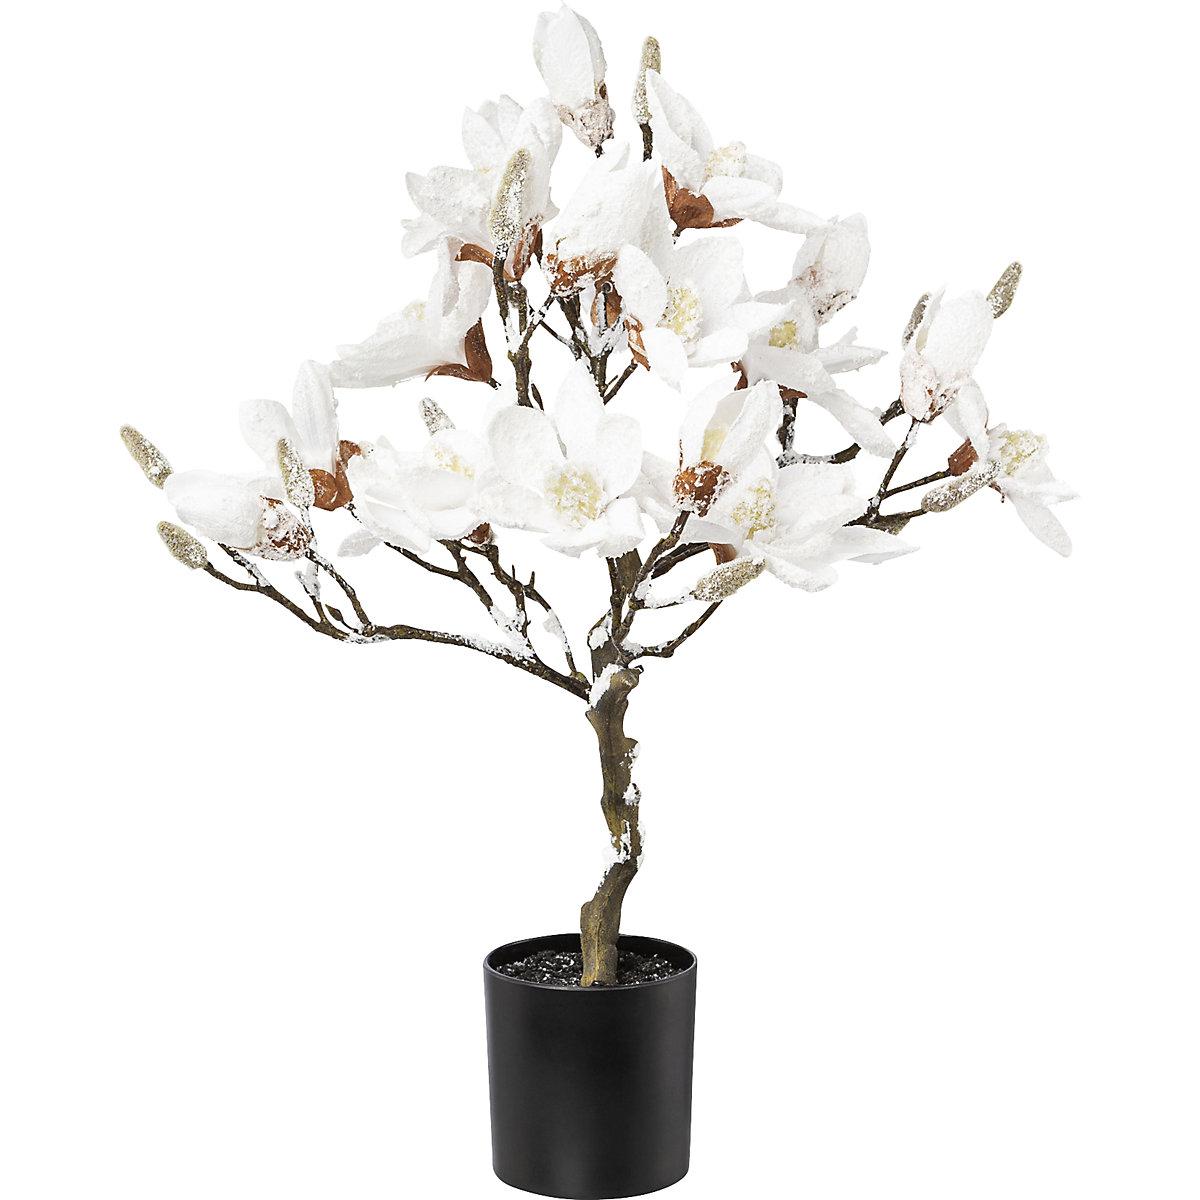 Magnolienbaum, beschneit